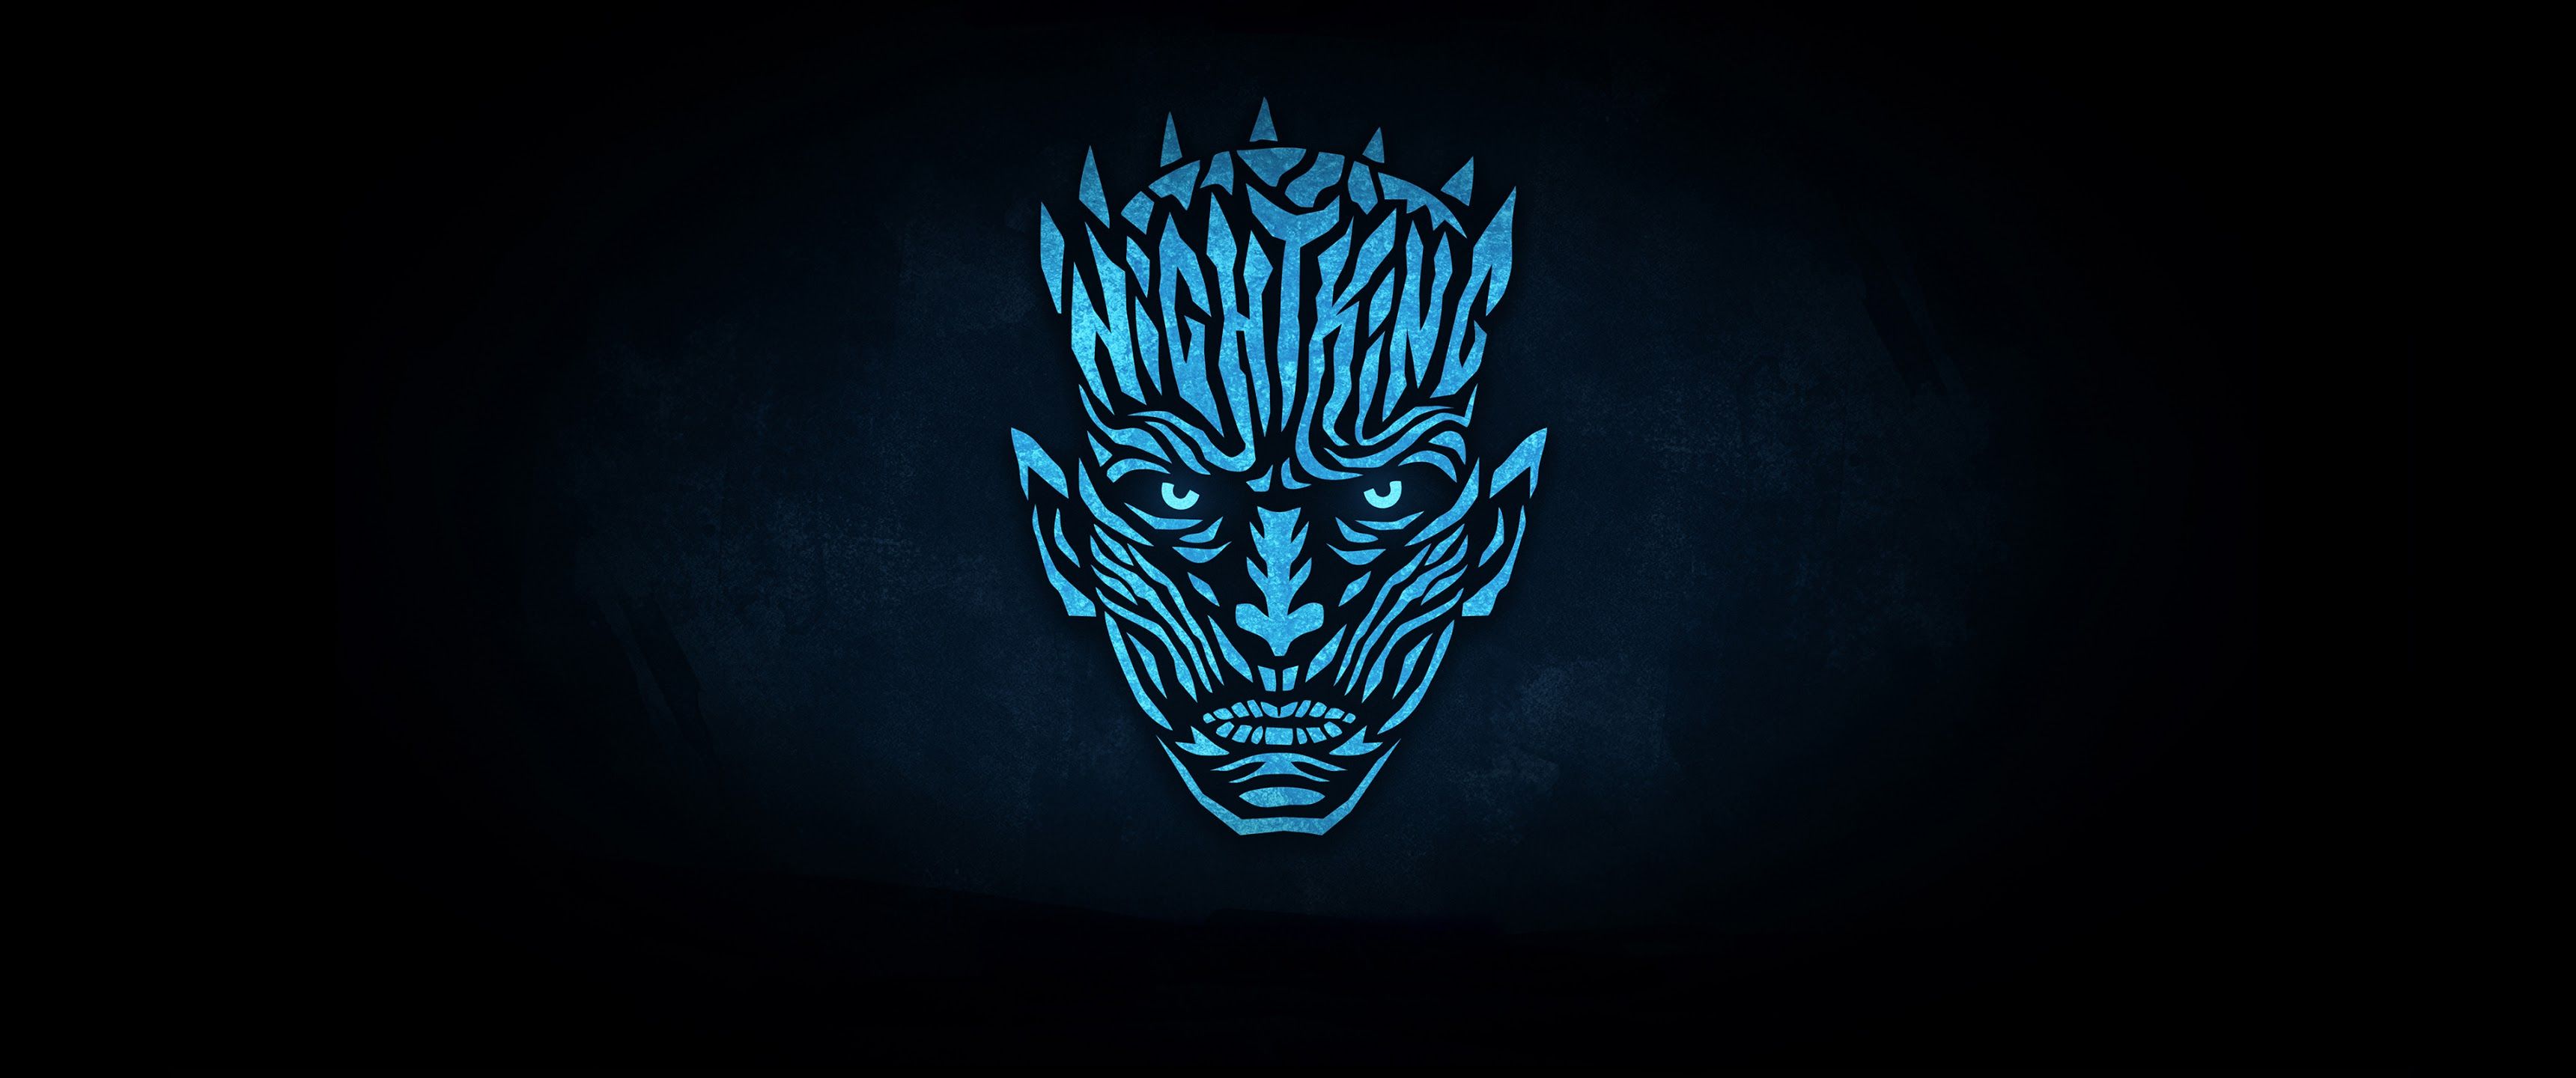 Night King Minimalist Game of Thrones 4K Wallpaper